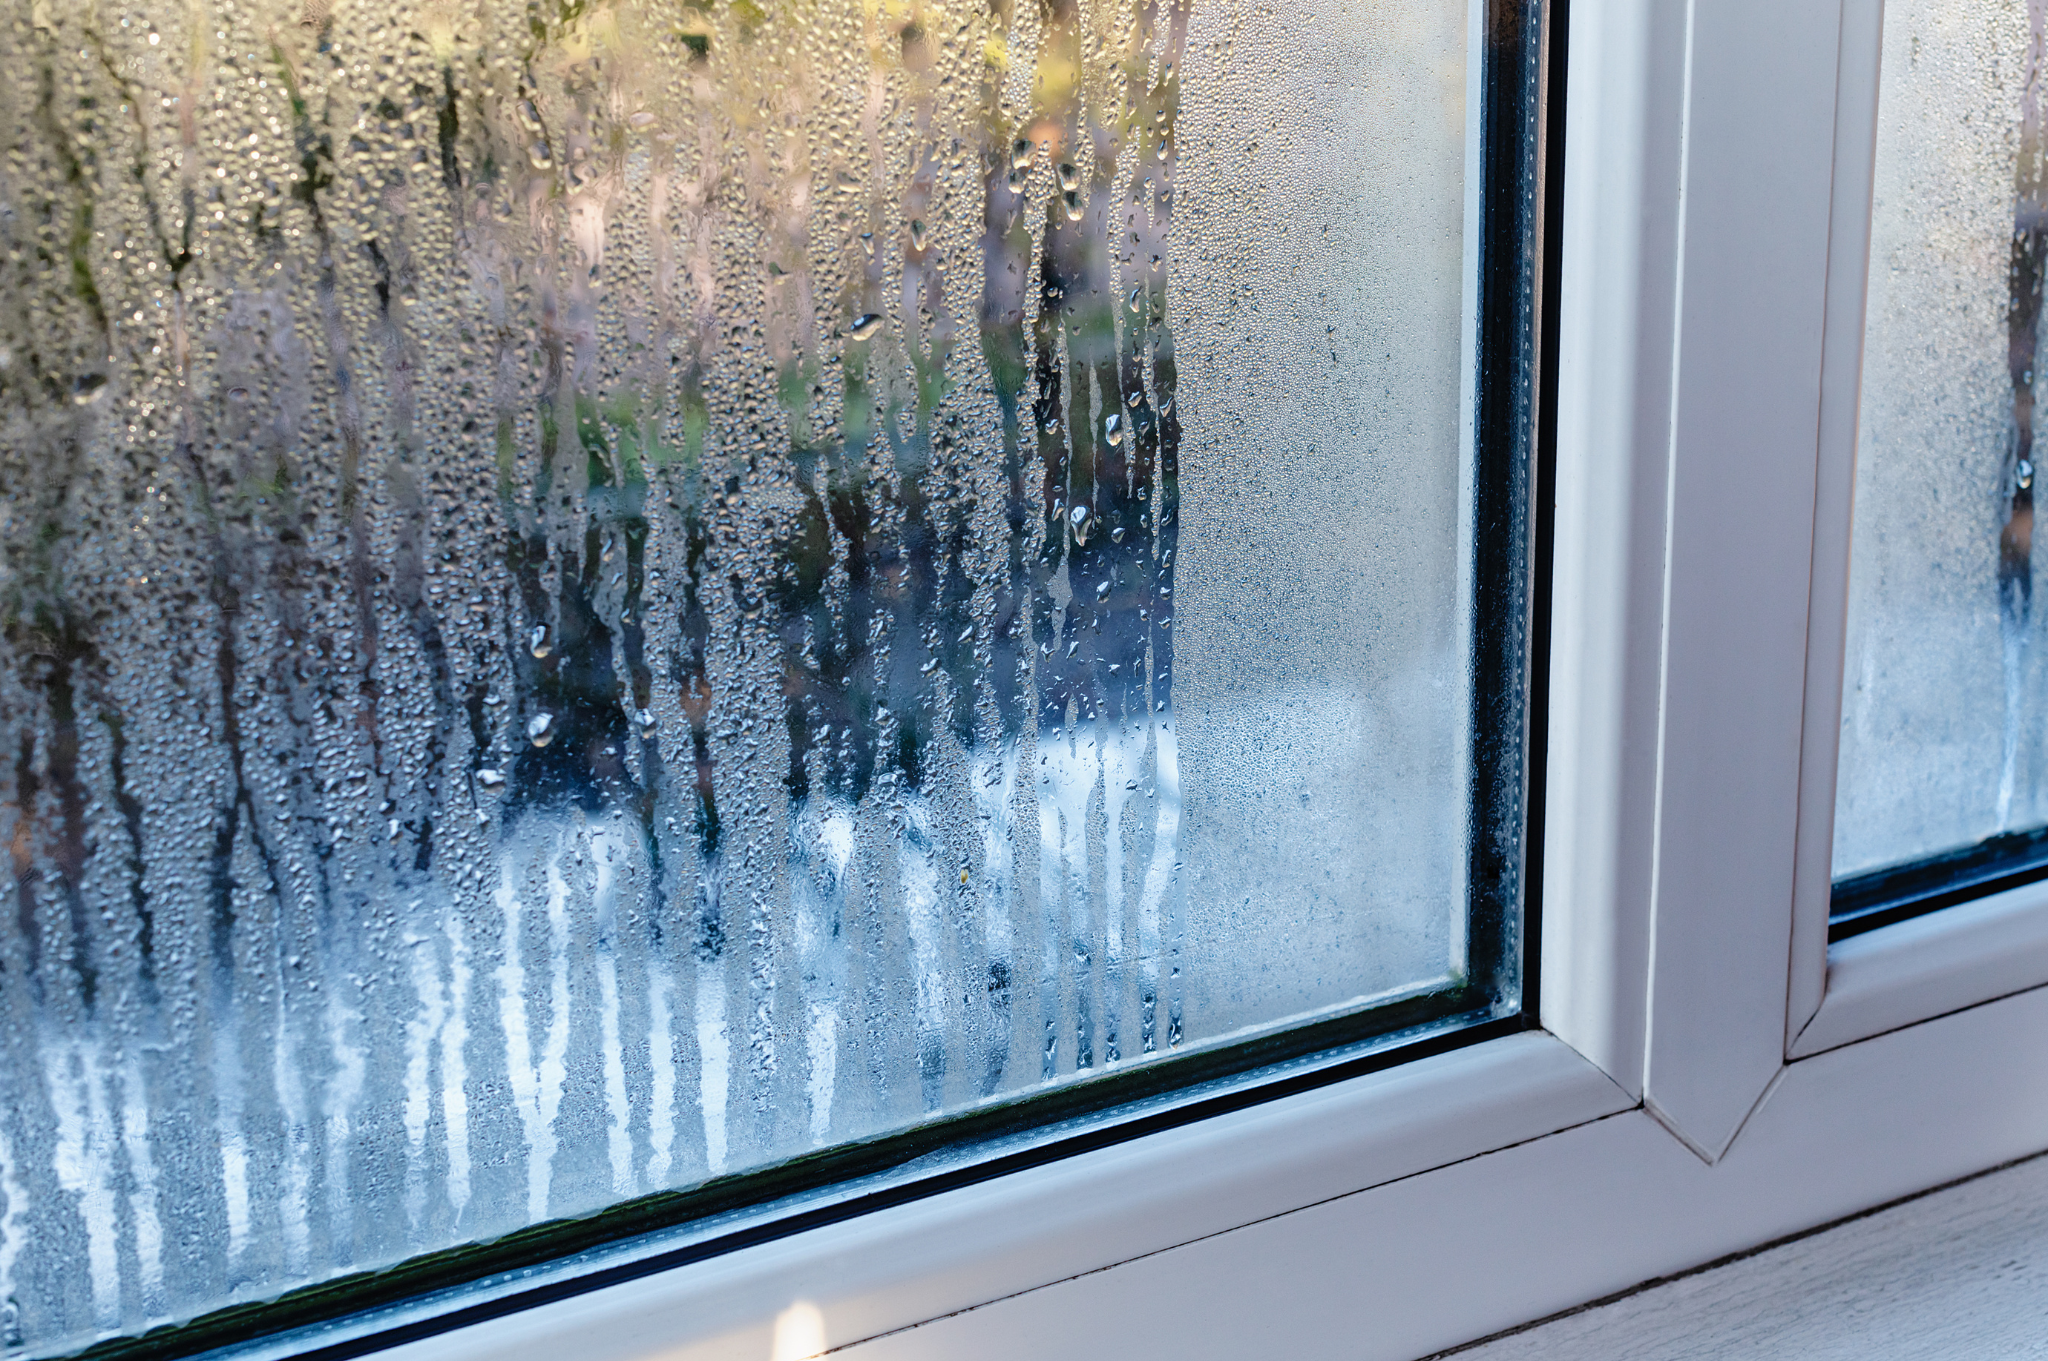 reduce solar heat gain in windows with DefenseLite